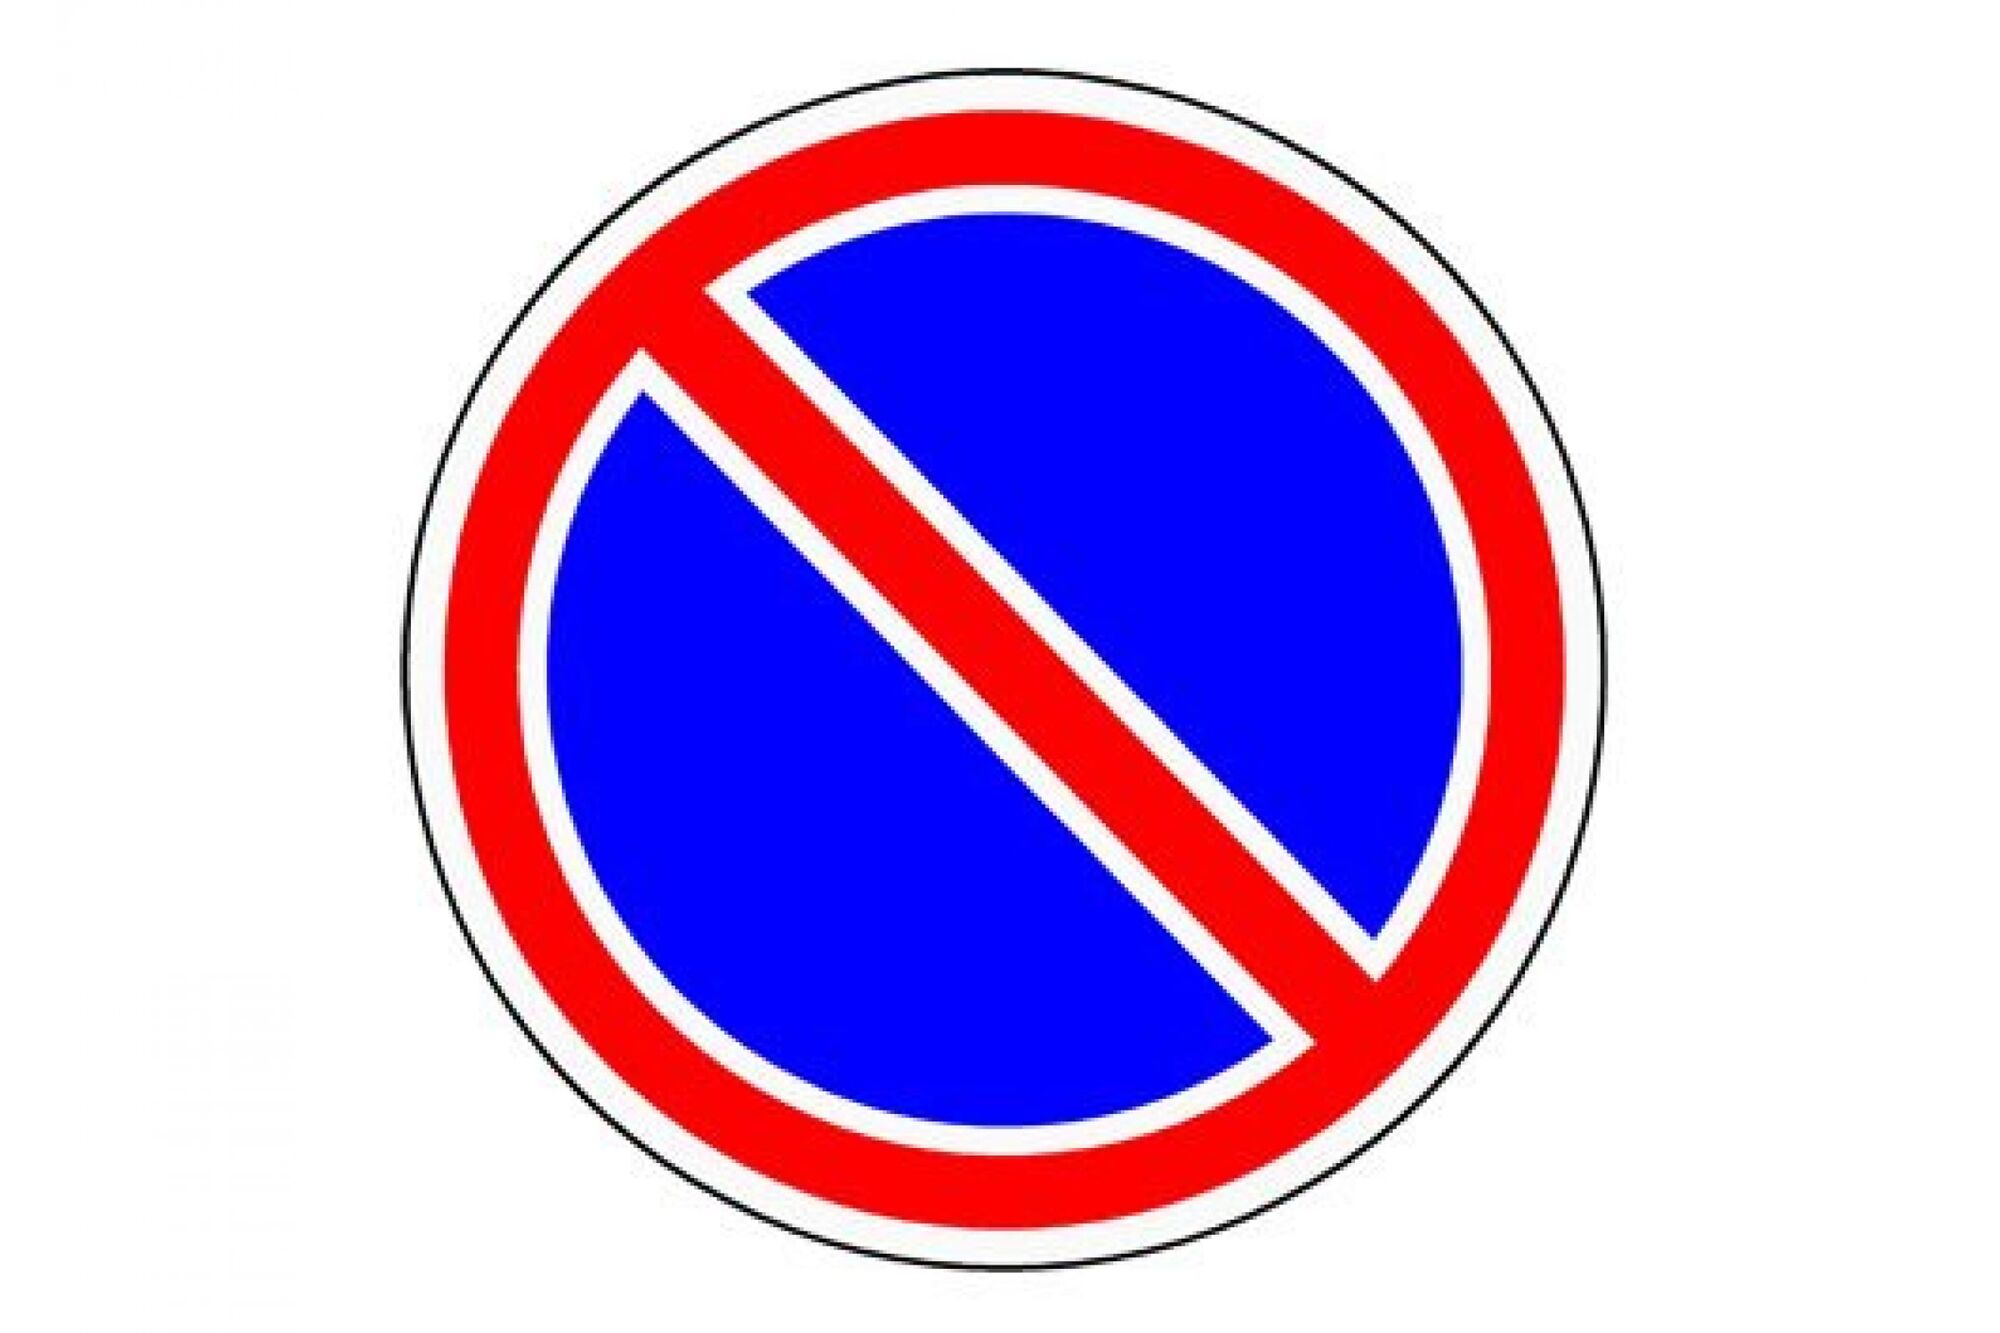 Остановка запрещена случаи. Знак 3.28 стоянка запрещена. Дорожного знака 3.27 (3.28) ПДД РФ. Знак 3.28 остановка запрещена. 3.28 Знак дорожный стоянка остановка запрещена.